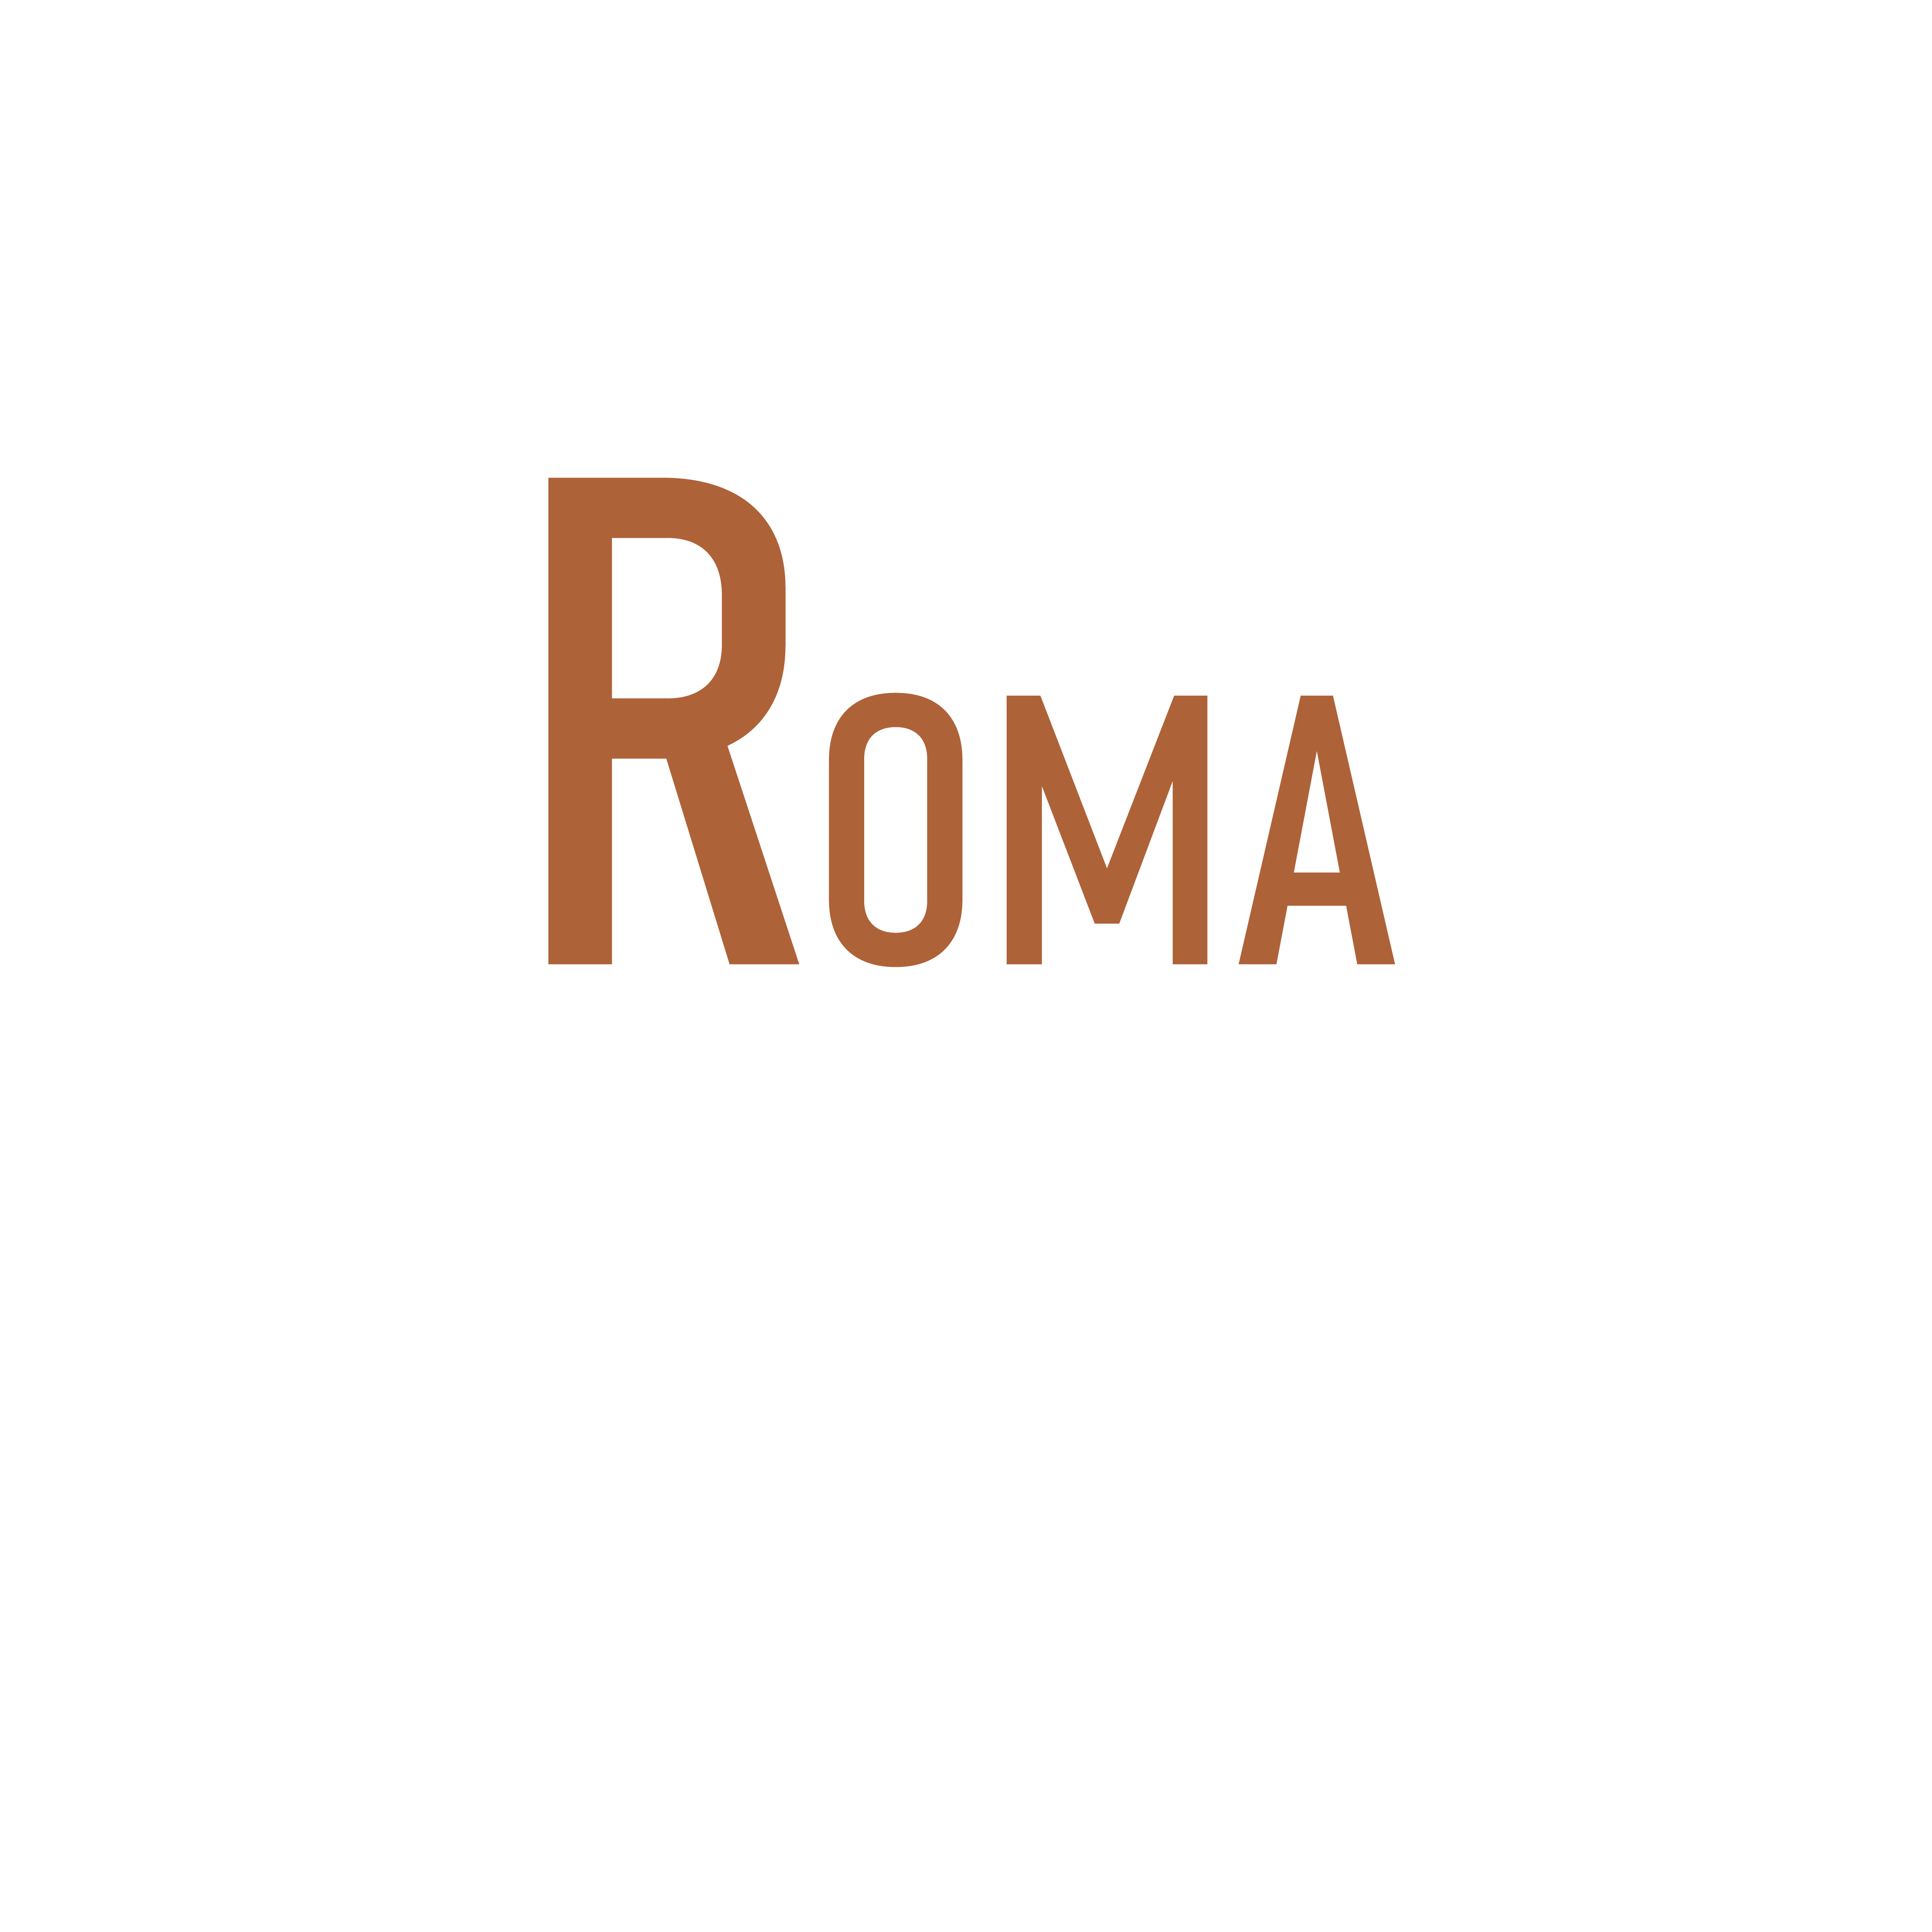 ROMA Consulting - EN